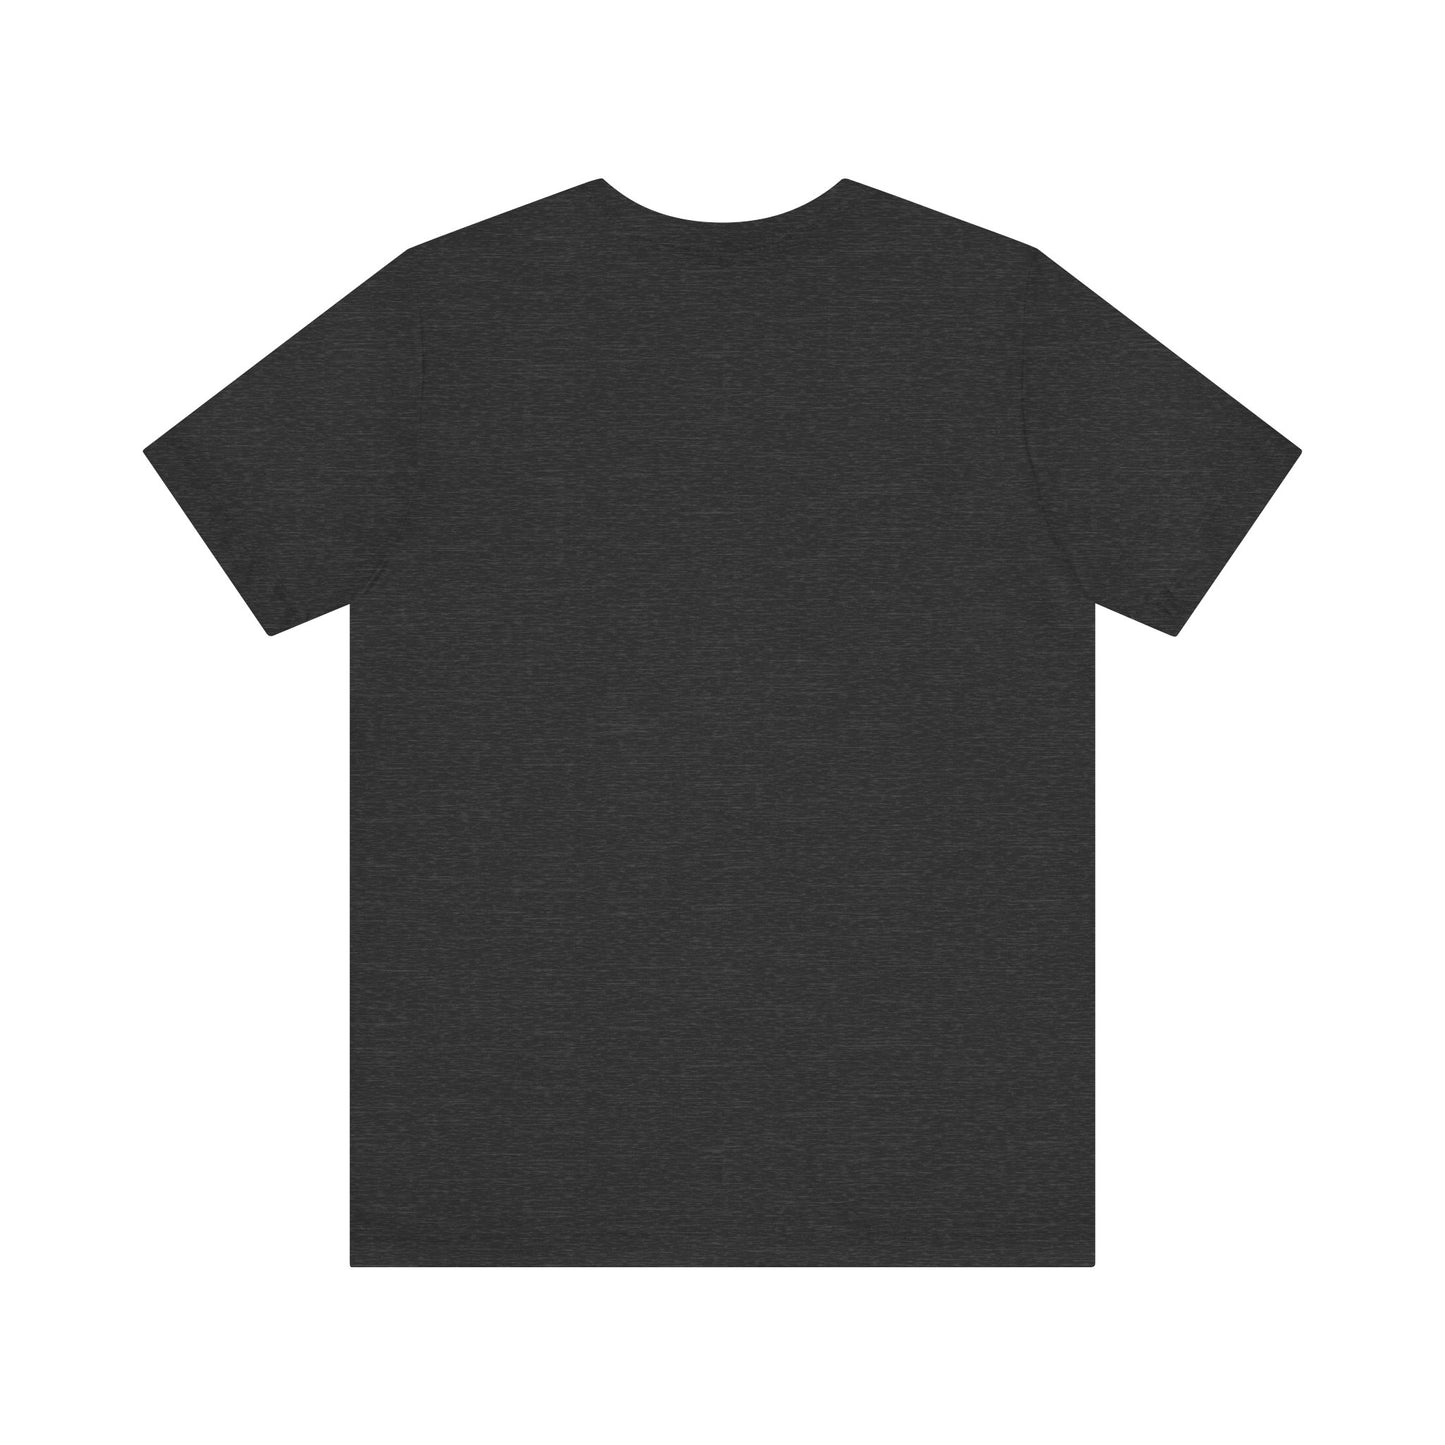 Mile High Satire T-Shirt - Blue Square Logo